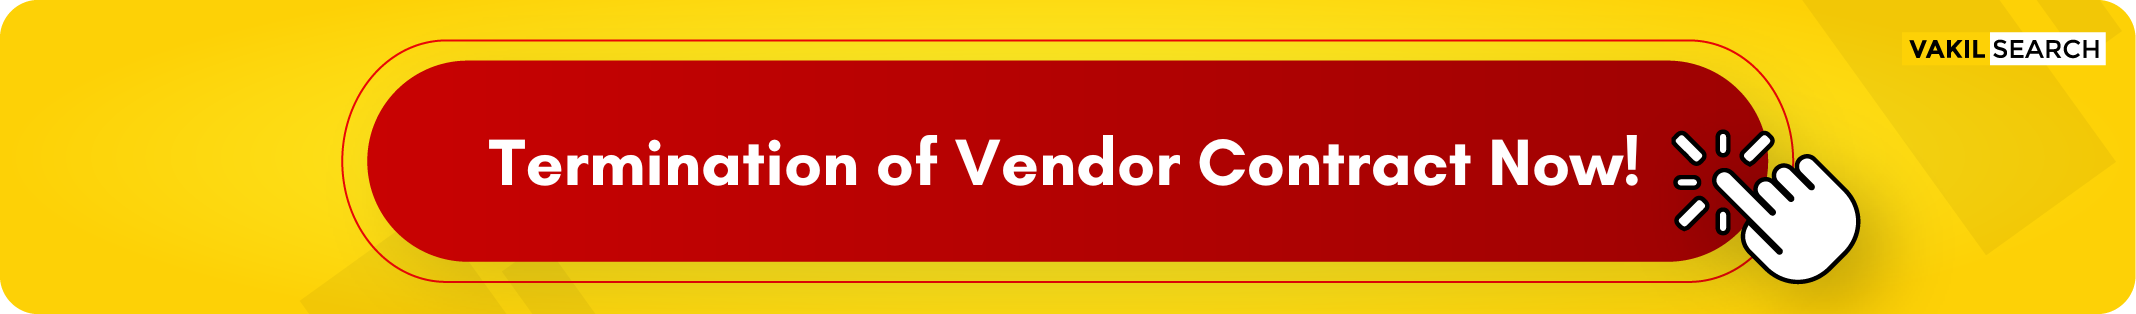 termination of vendor contract